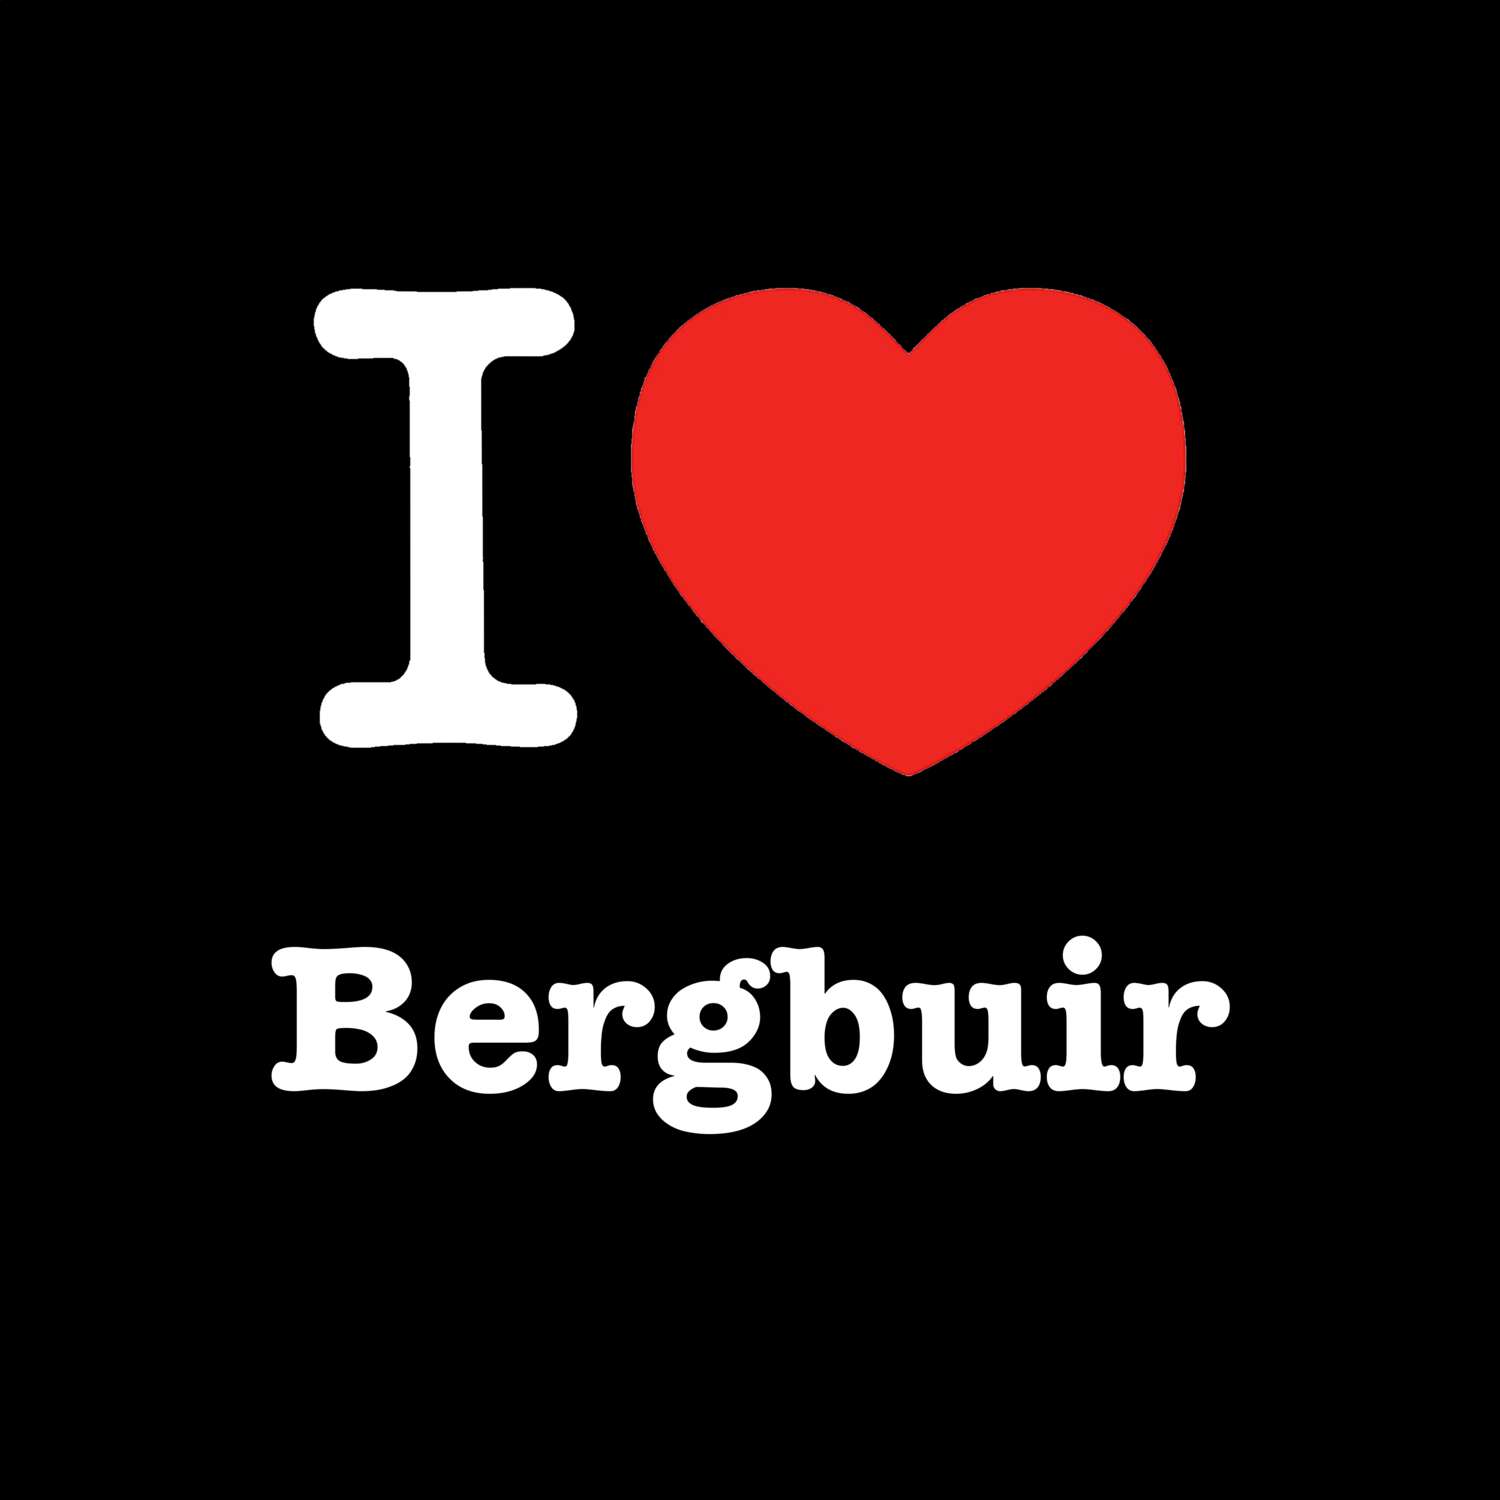 Bergbuir T-Shirt »I love«